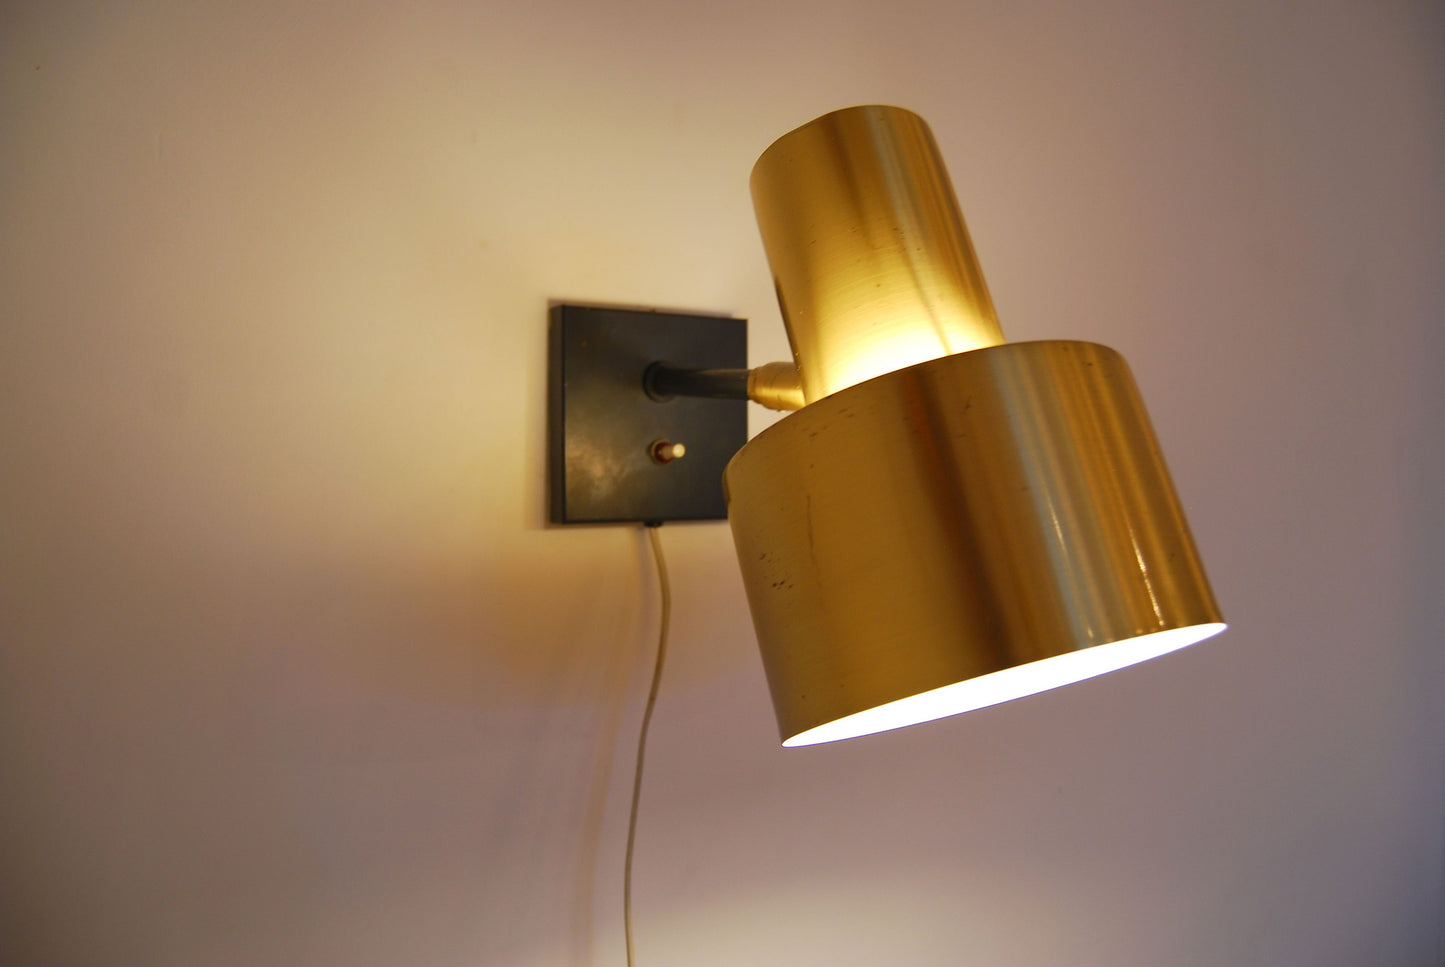 Wall lamp produced by Fog & MÌürup